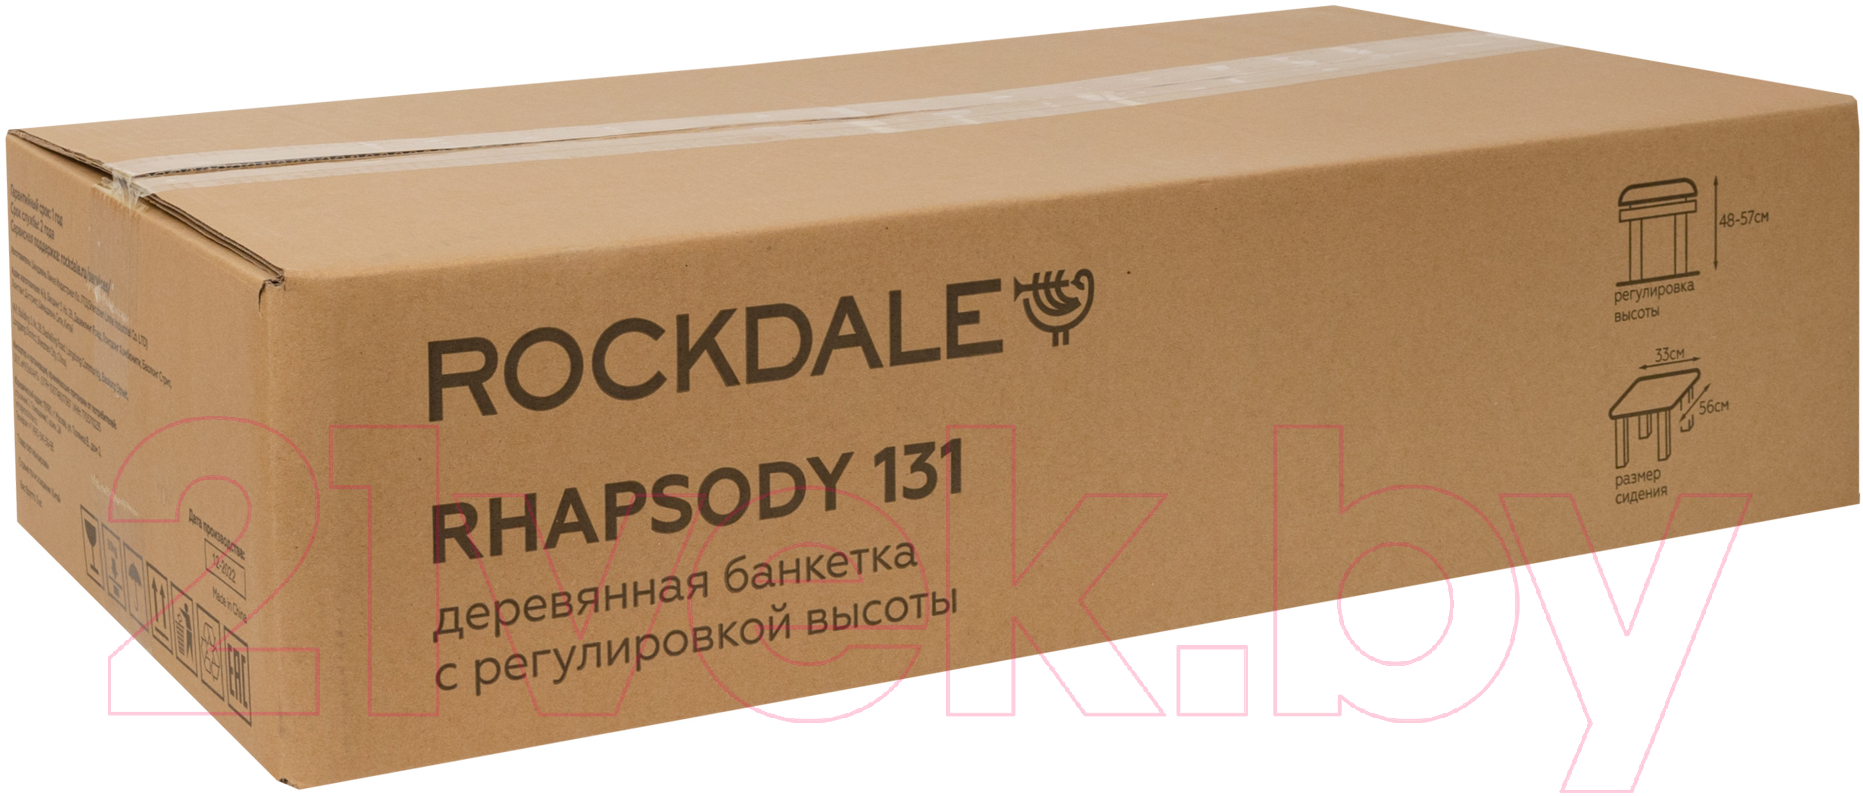 Банкетка для музыкантов Rockdale Rhapsody 131 Black / A124584